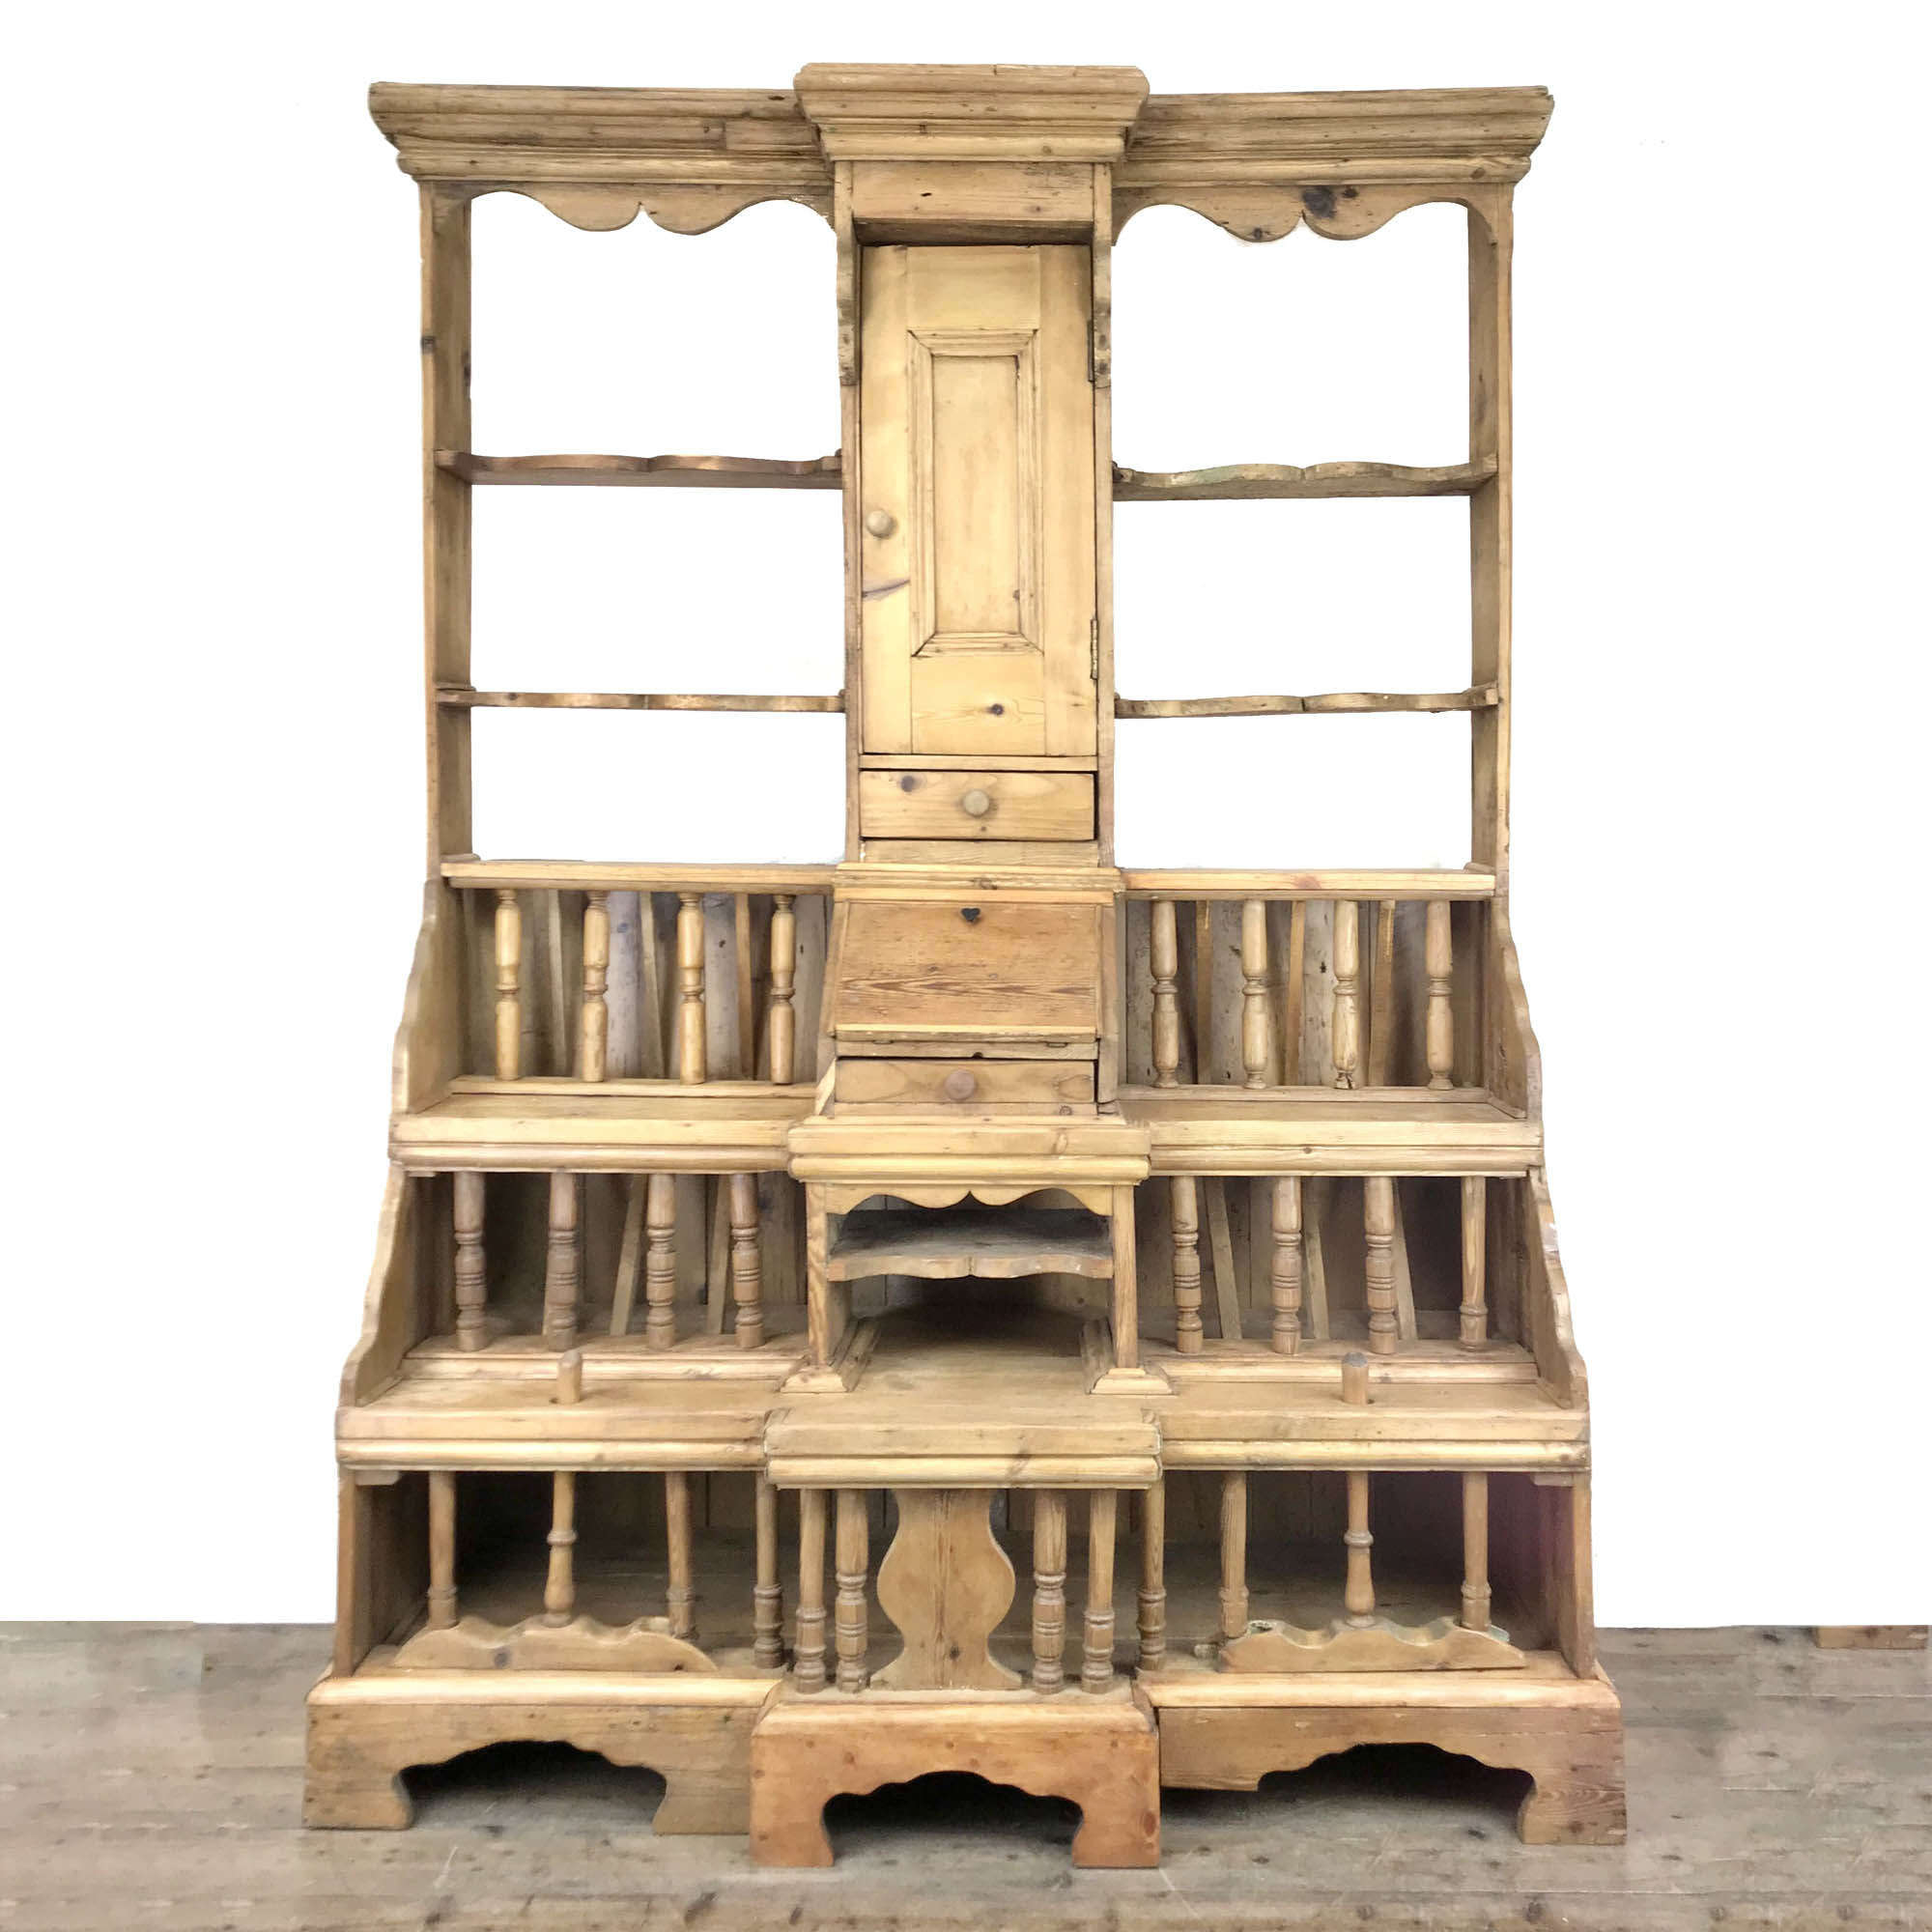 Early Nineteenth Century Irish Chicken Coop Antique Dresser